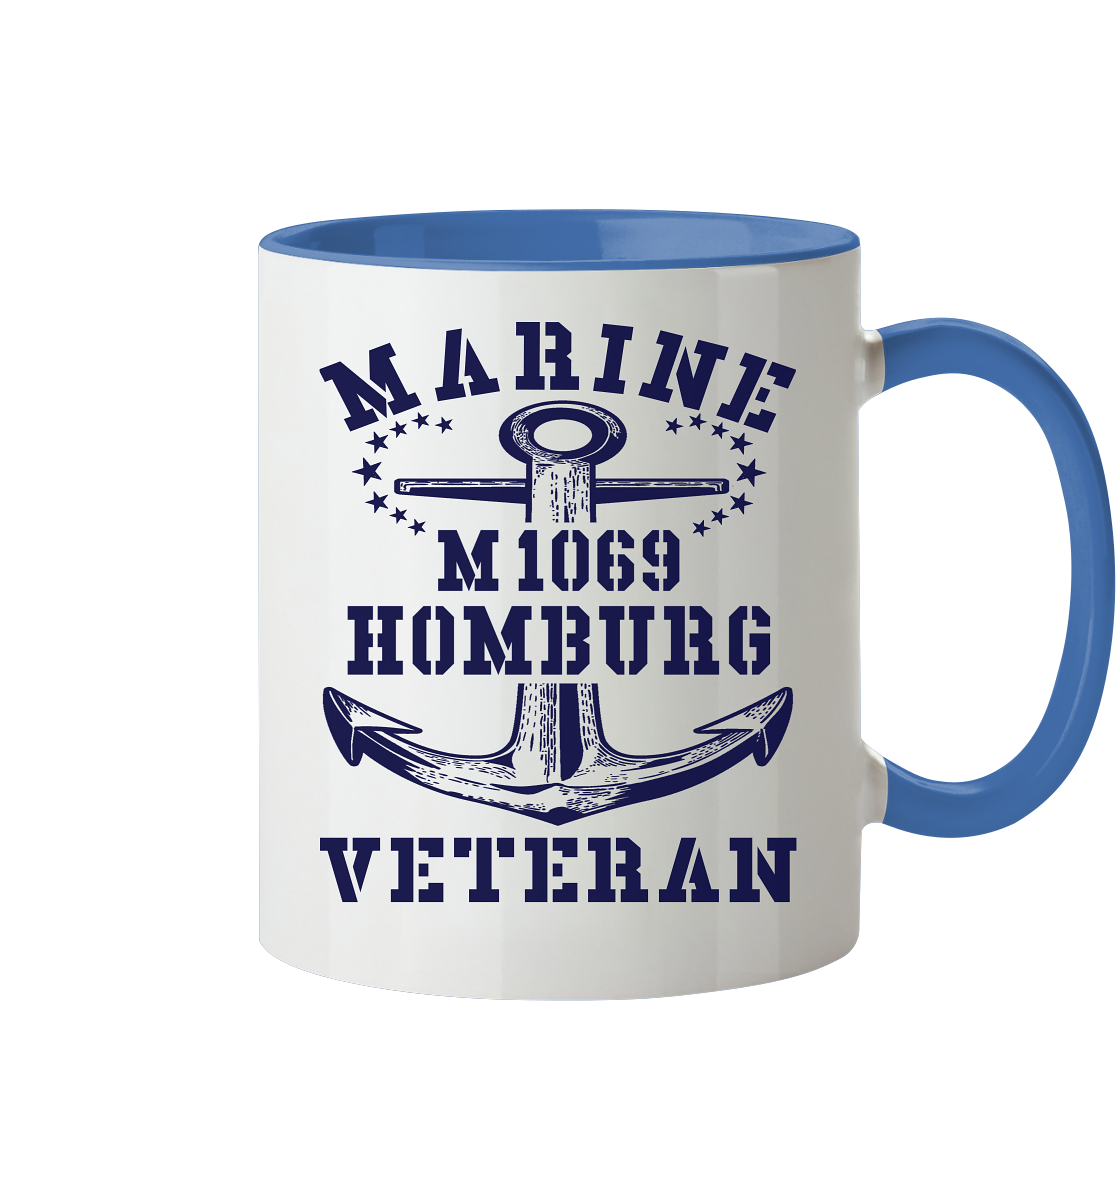 Mij.-Boot M1069 HOMBURG Marine Veteran - Tasse zweifarbig